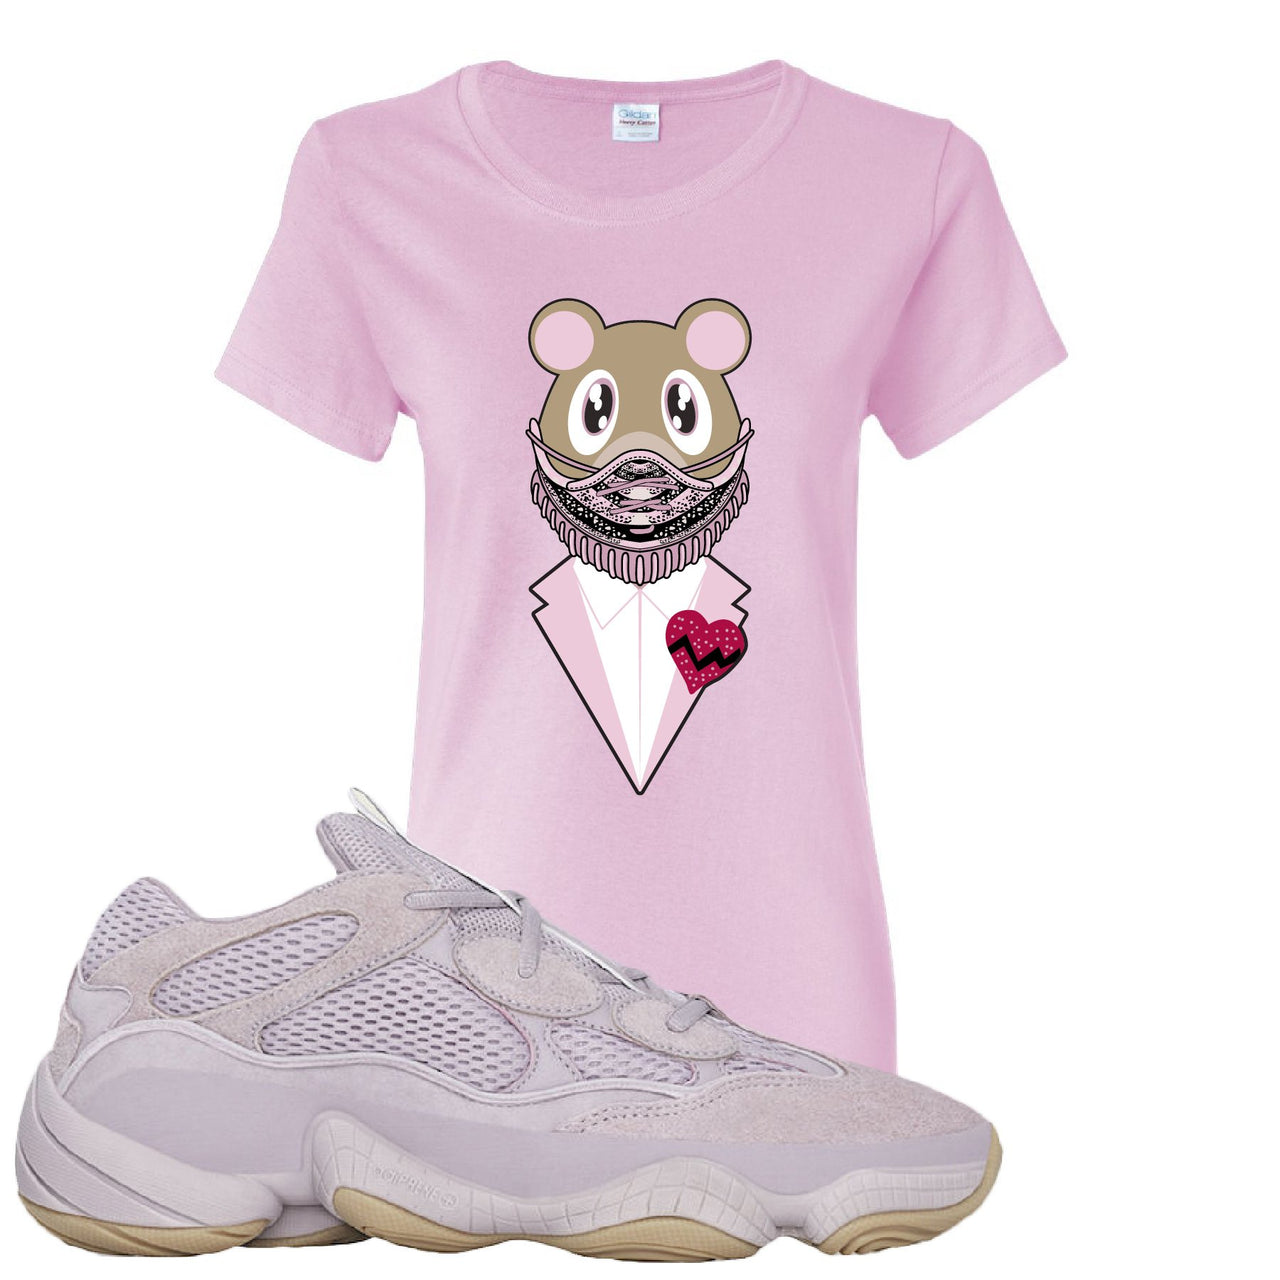 Yeezy 500 Soft Vision Yeezy Sneaker Mask Light Pink Sneaker Hook Up Women's T-Shirt